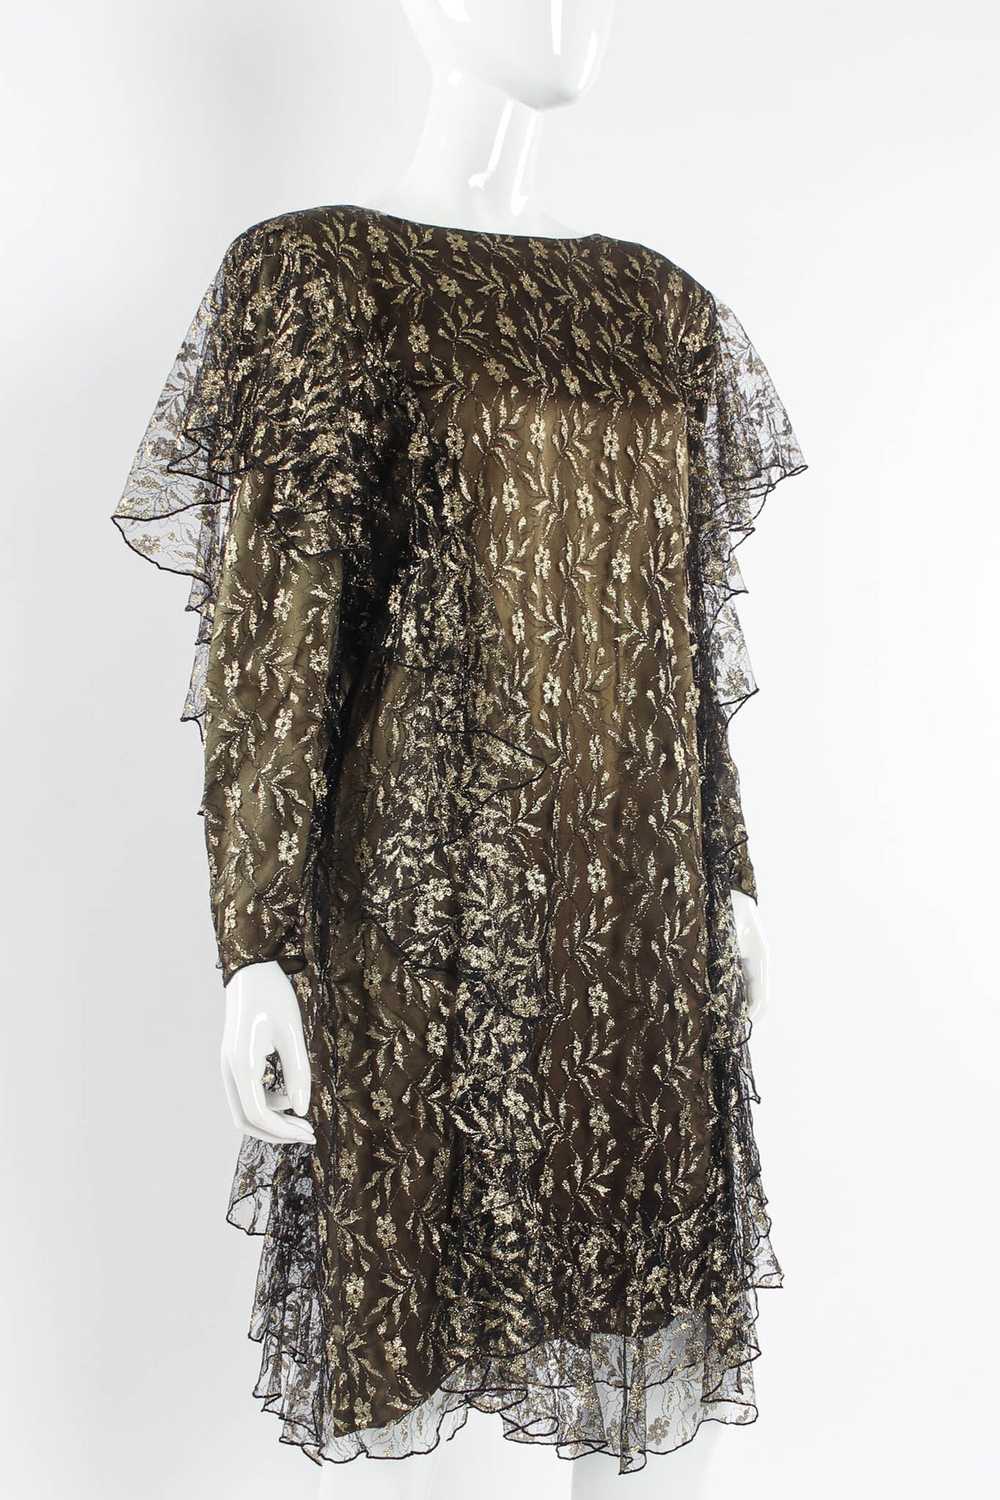 HOLLY'S HARP Metallic Floral Ruffle Dress - image 2